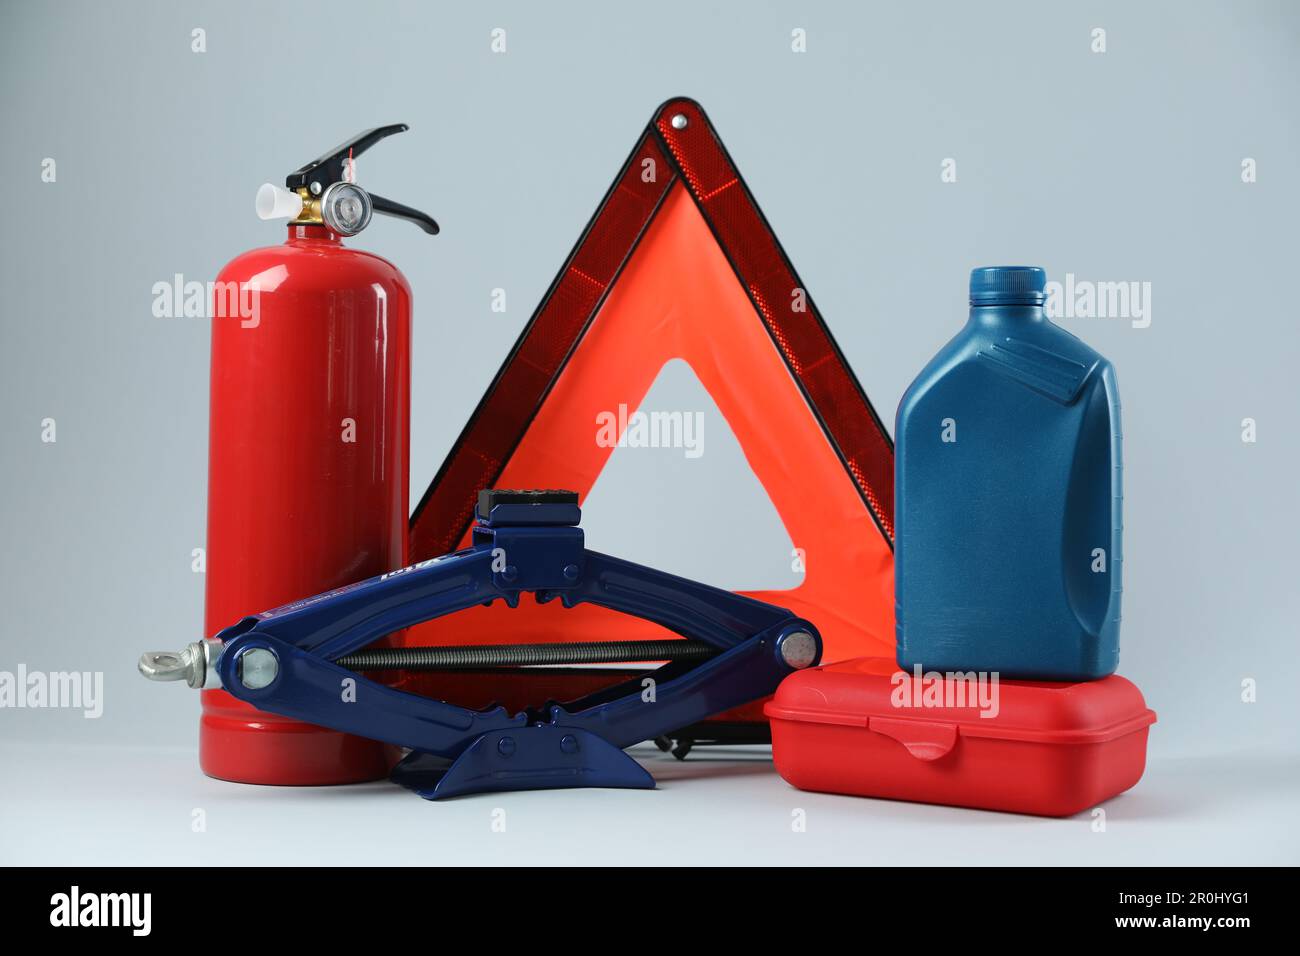 Set of car safety equipment on light grey background Stock Photo